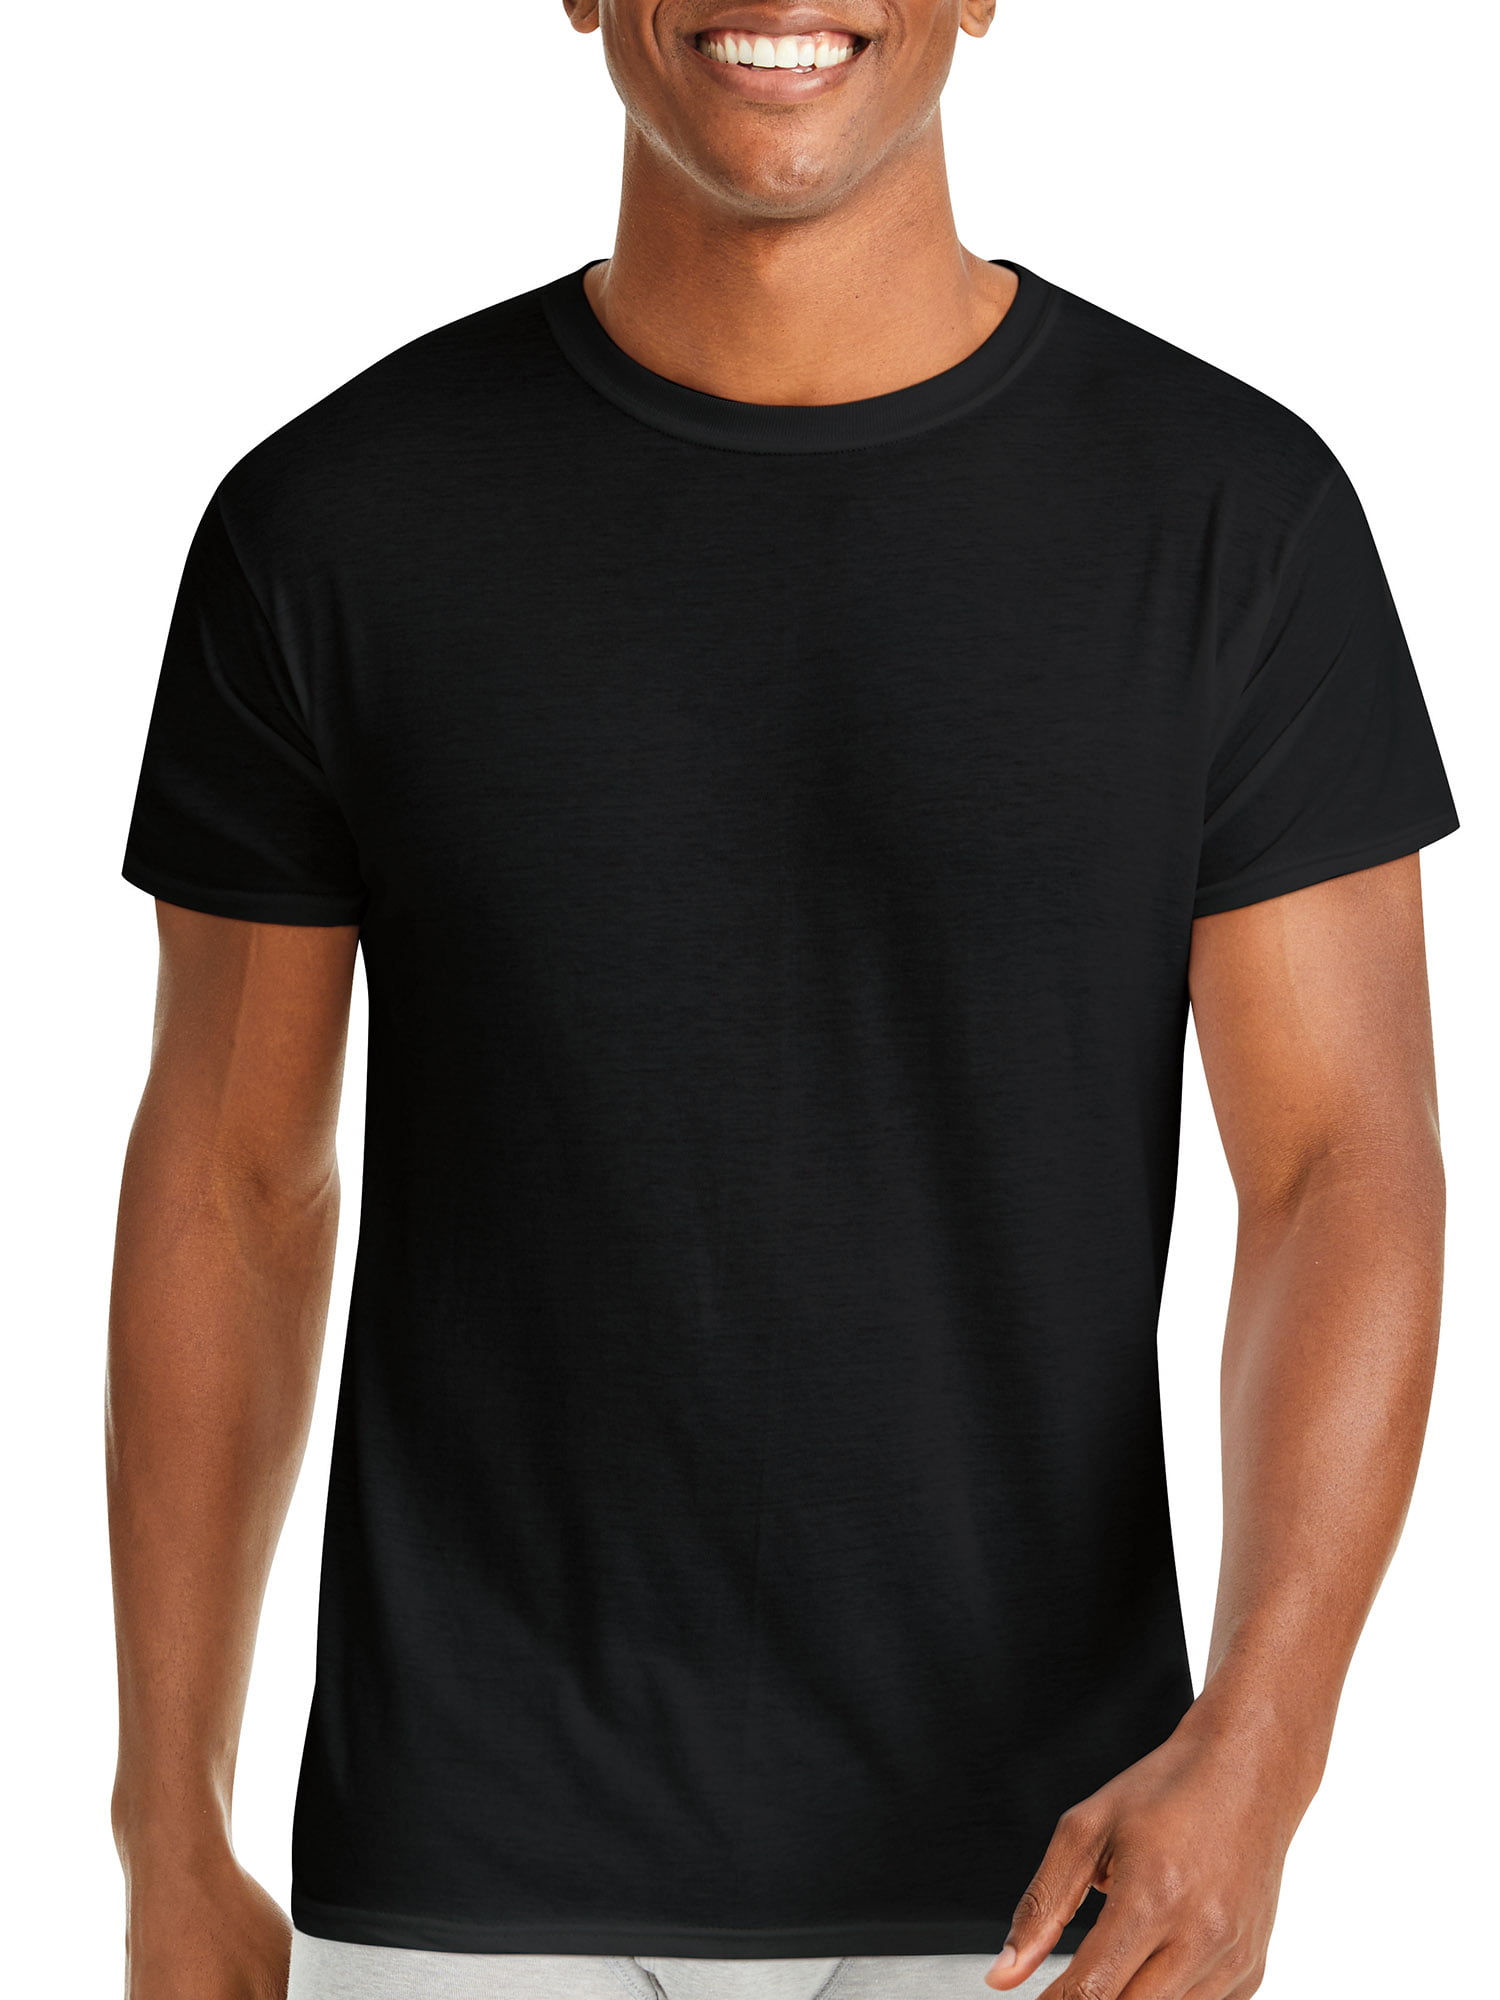 Men's Tagless ComfortSoft White Crewneck T-Shirts